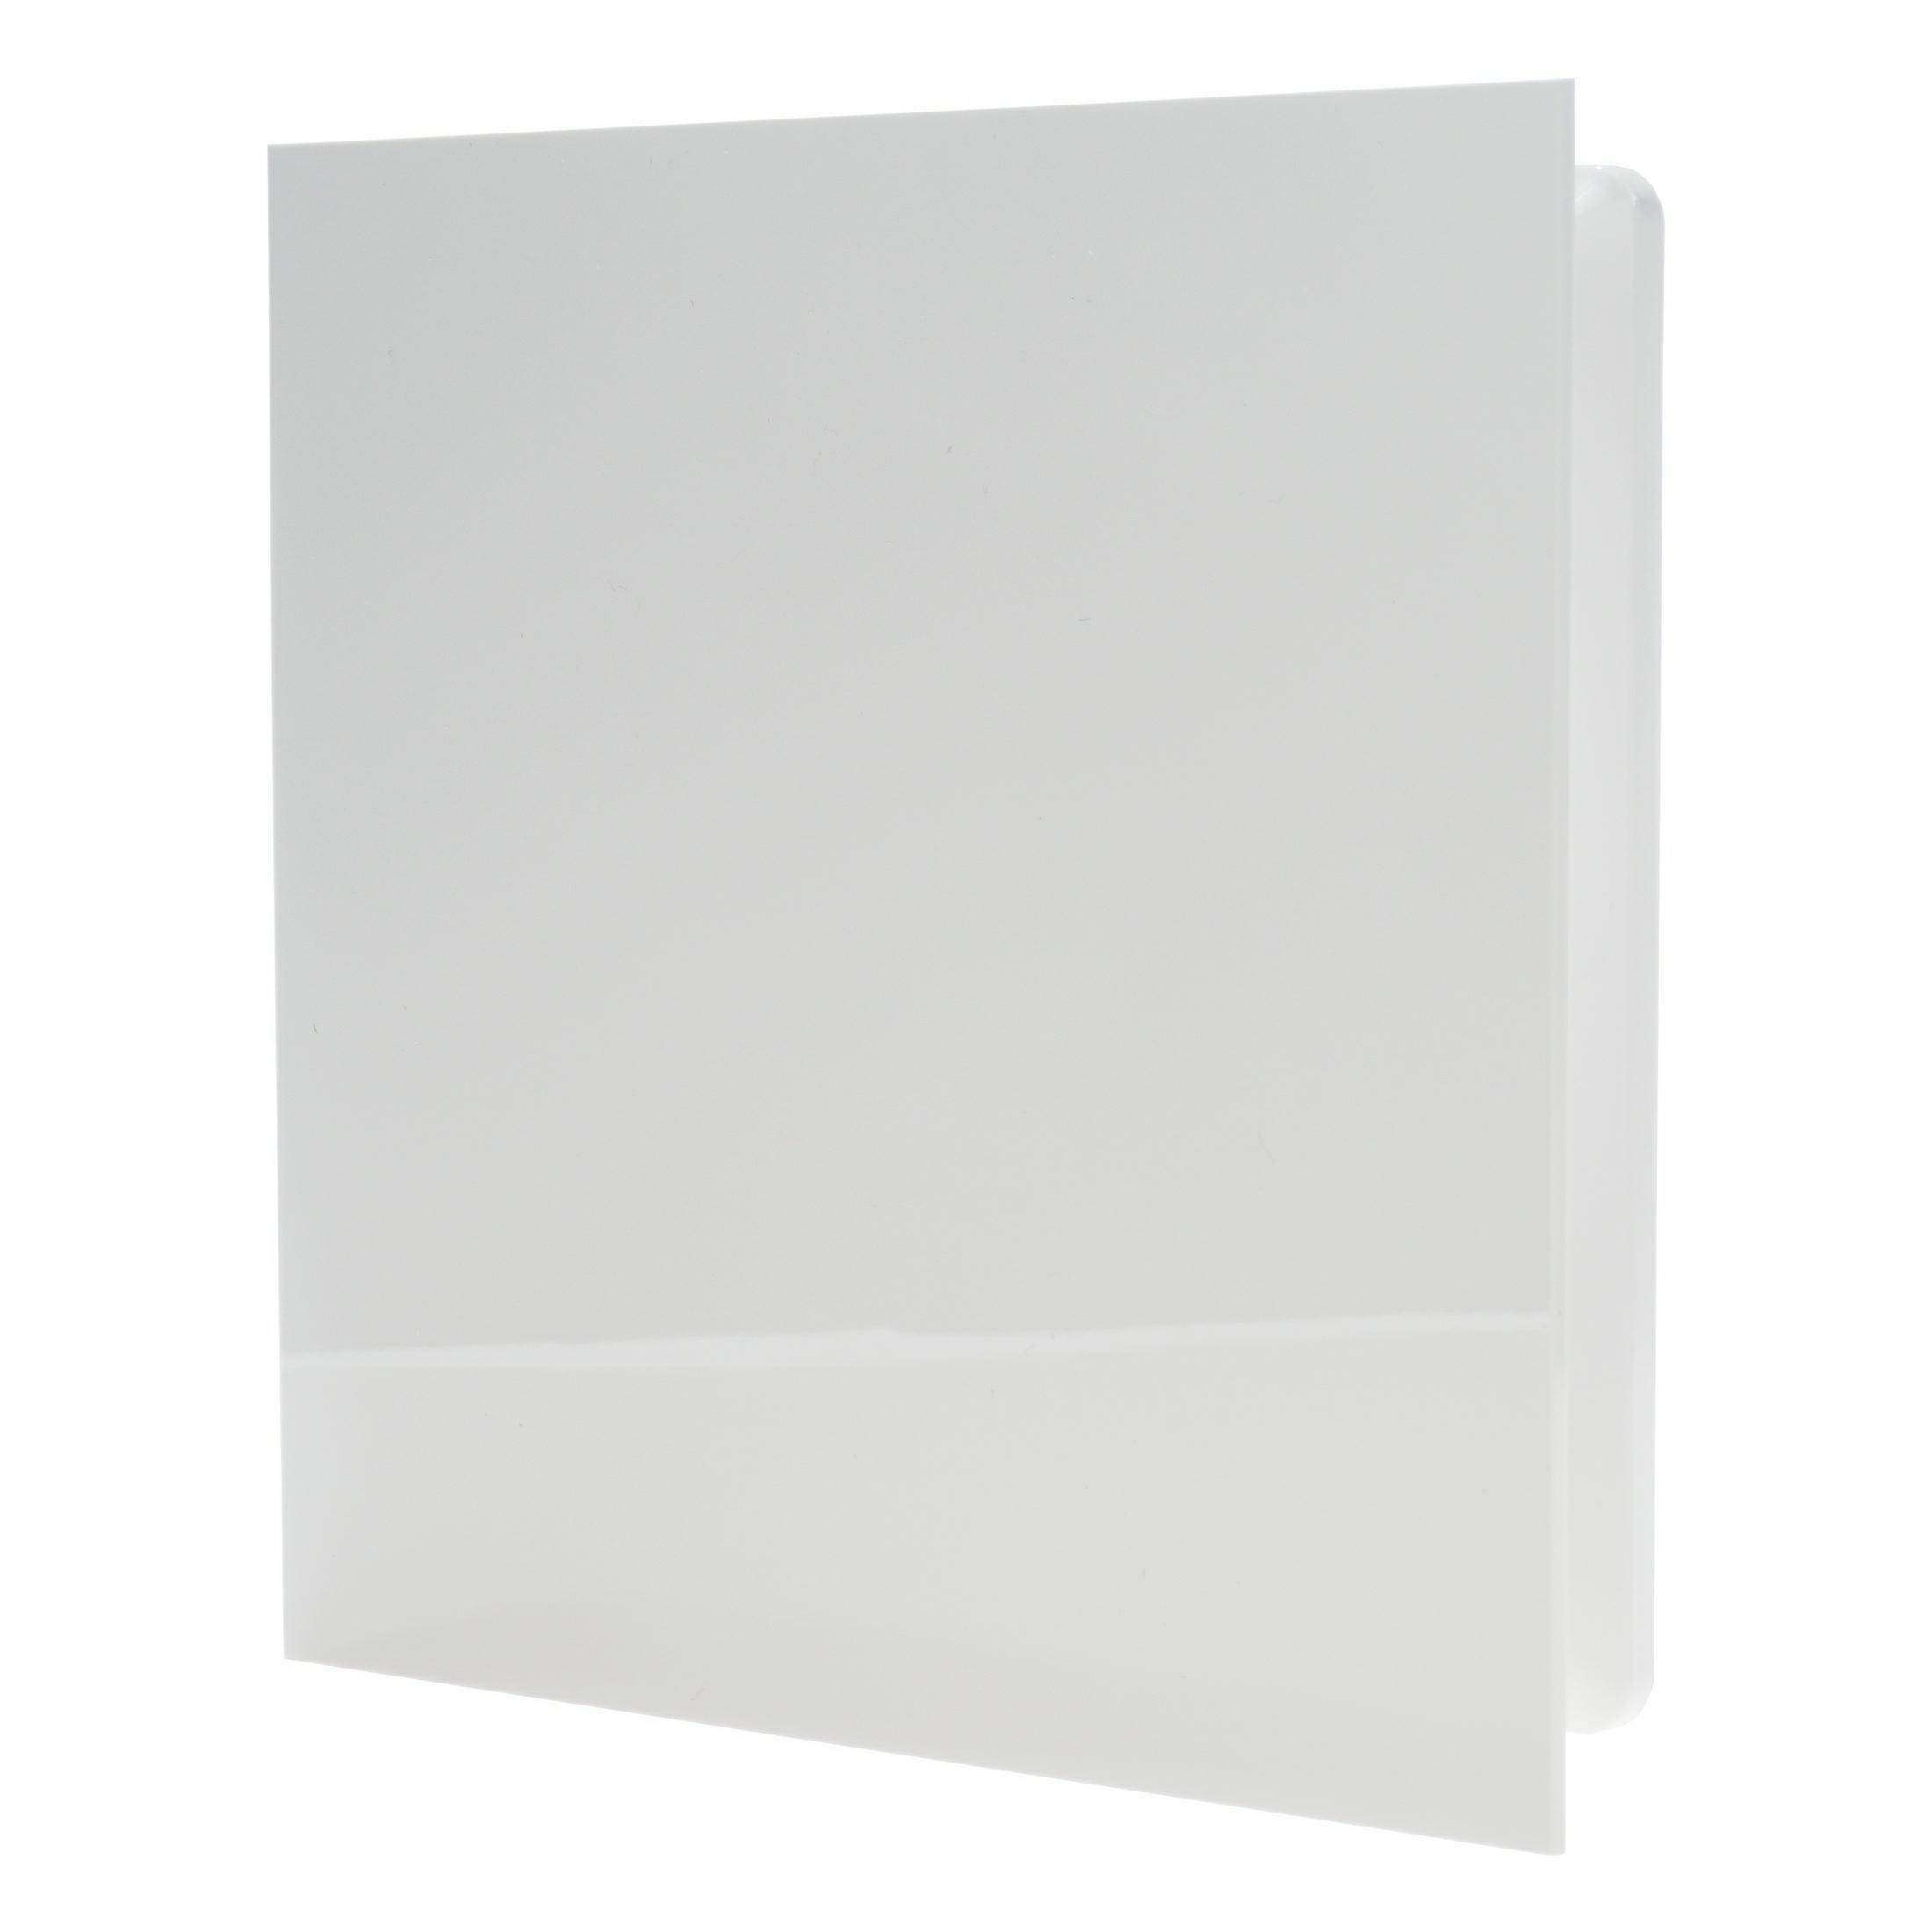 White Ventilation Grille 16x16